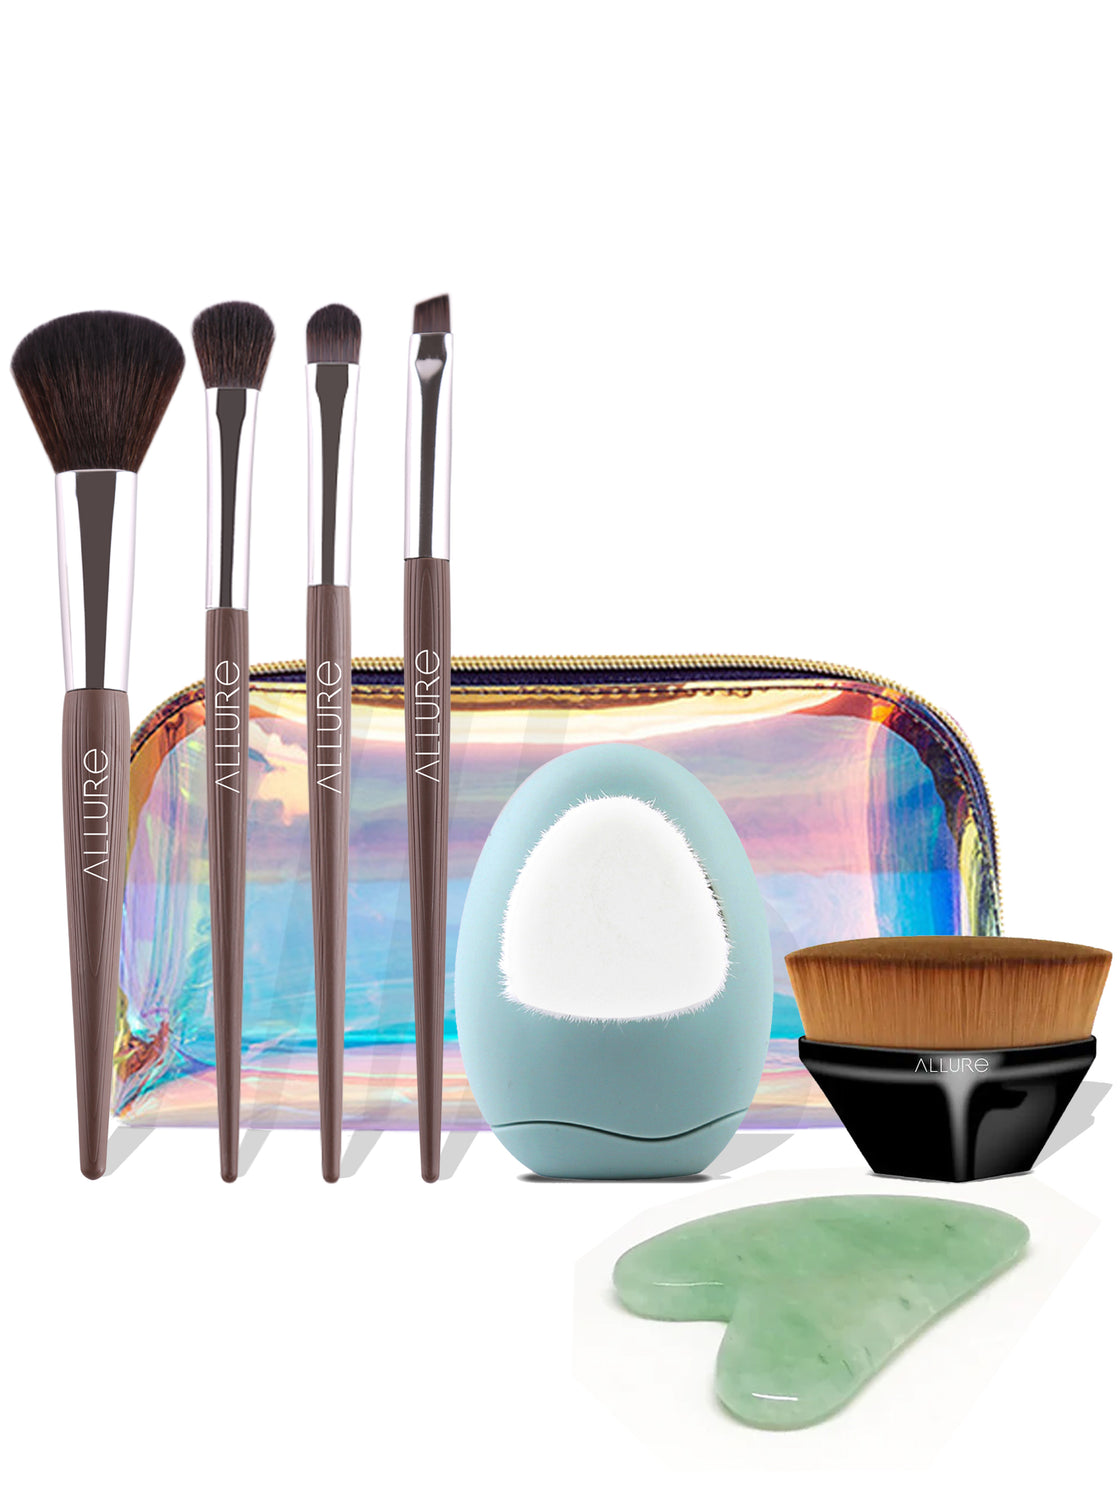 Gift Set Contains 4 Pc Makeup Brush Set & Essential Makeup Tools-2